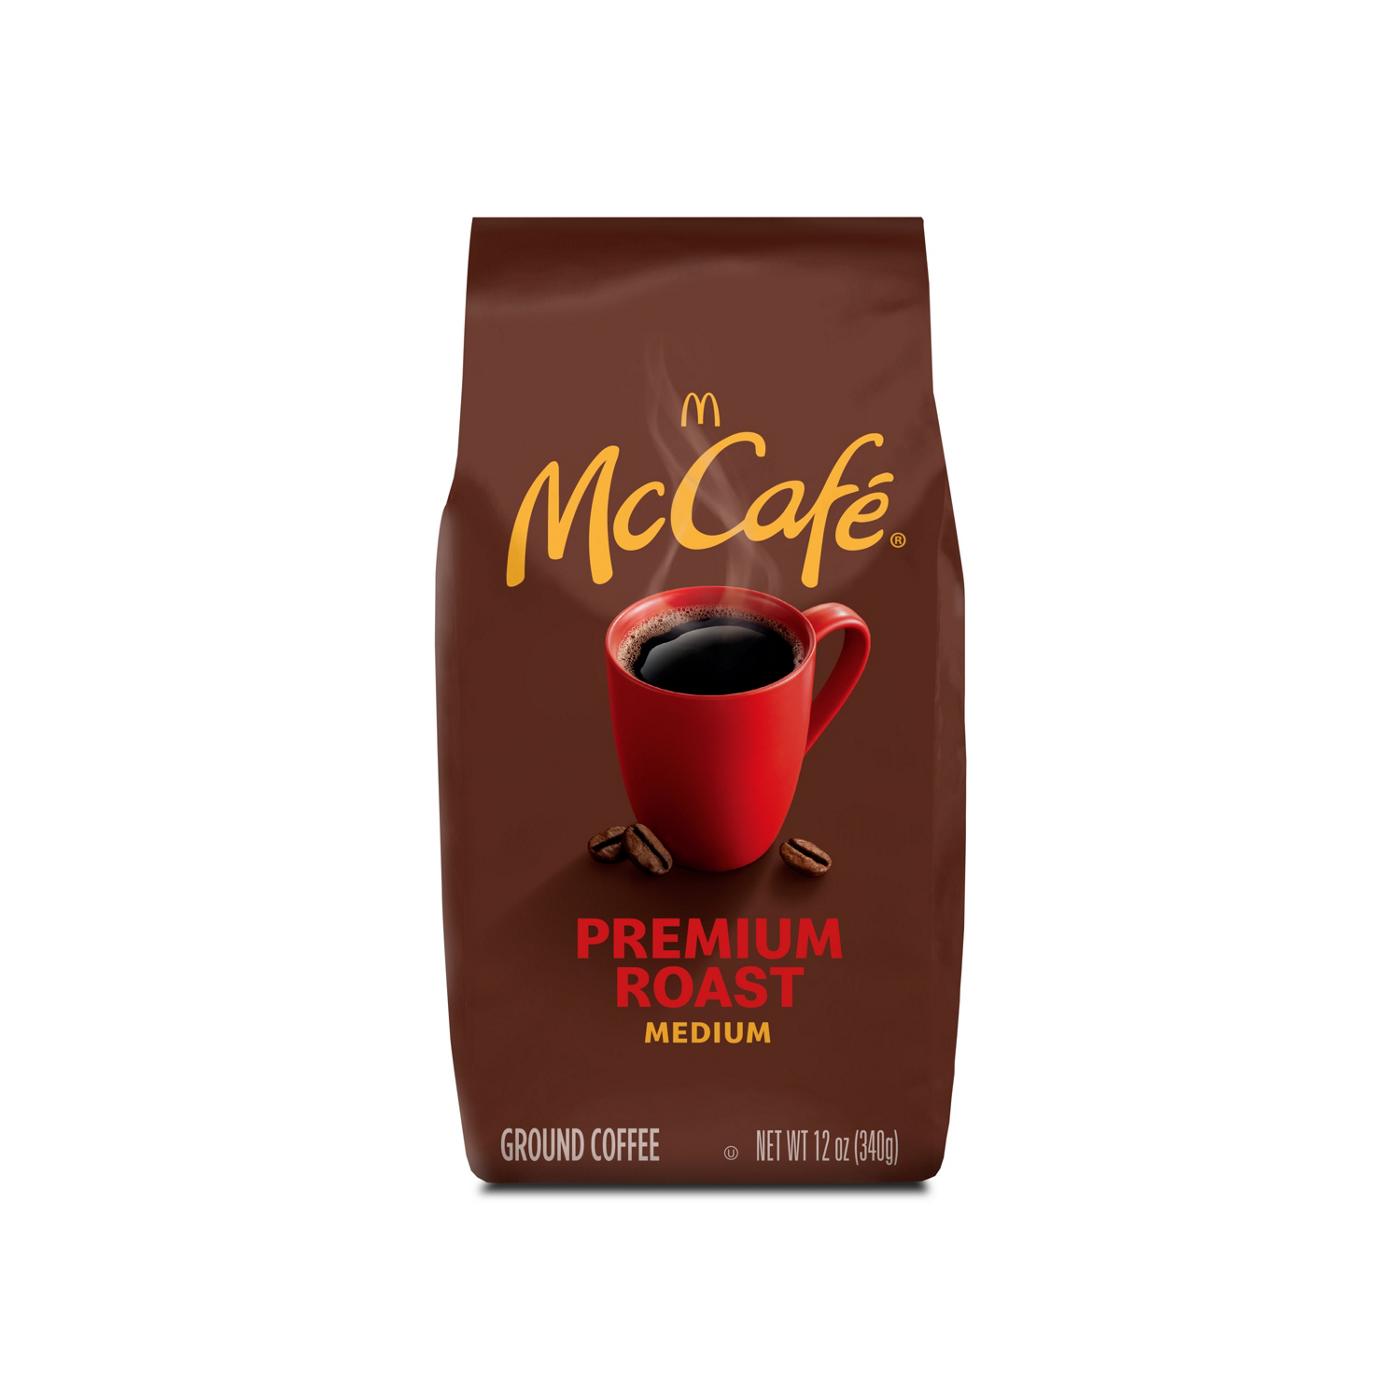 McCafe Premium Roast Medium Ground Coffee; image 1 of 7